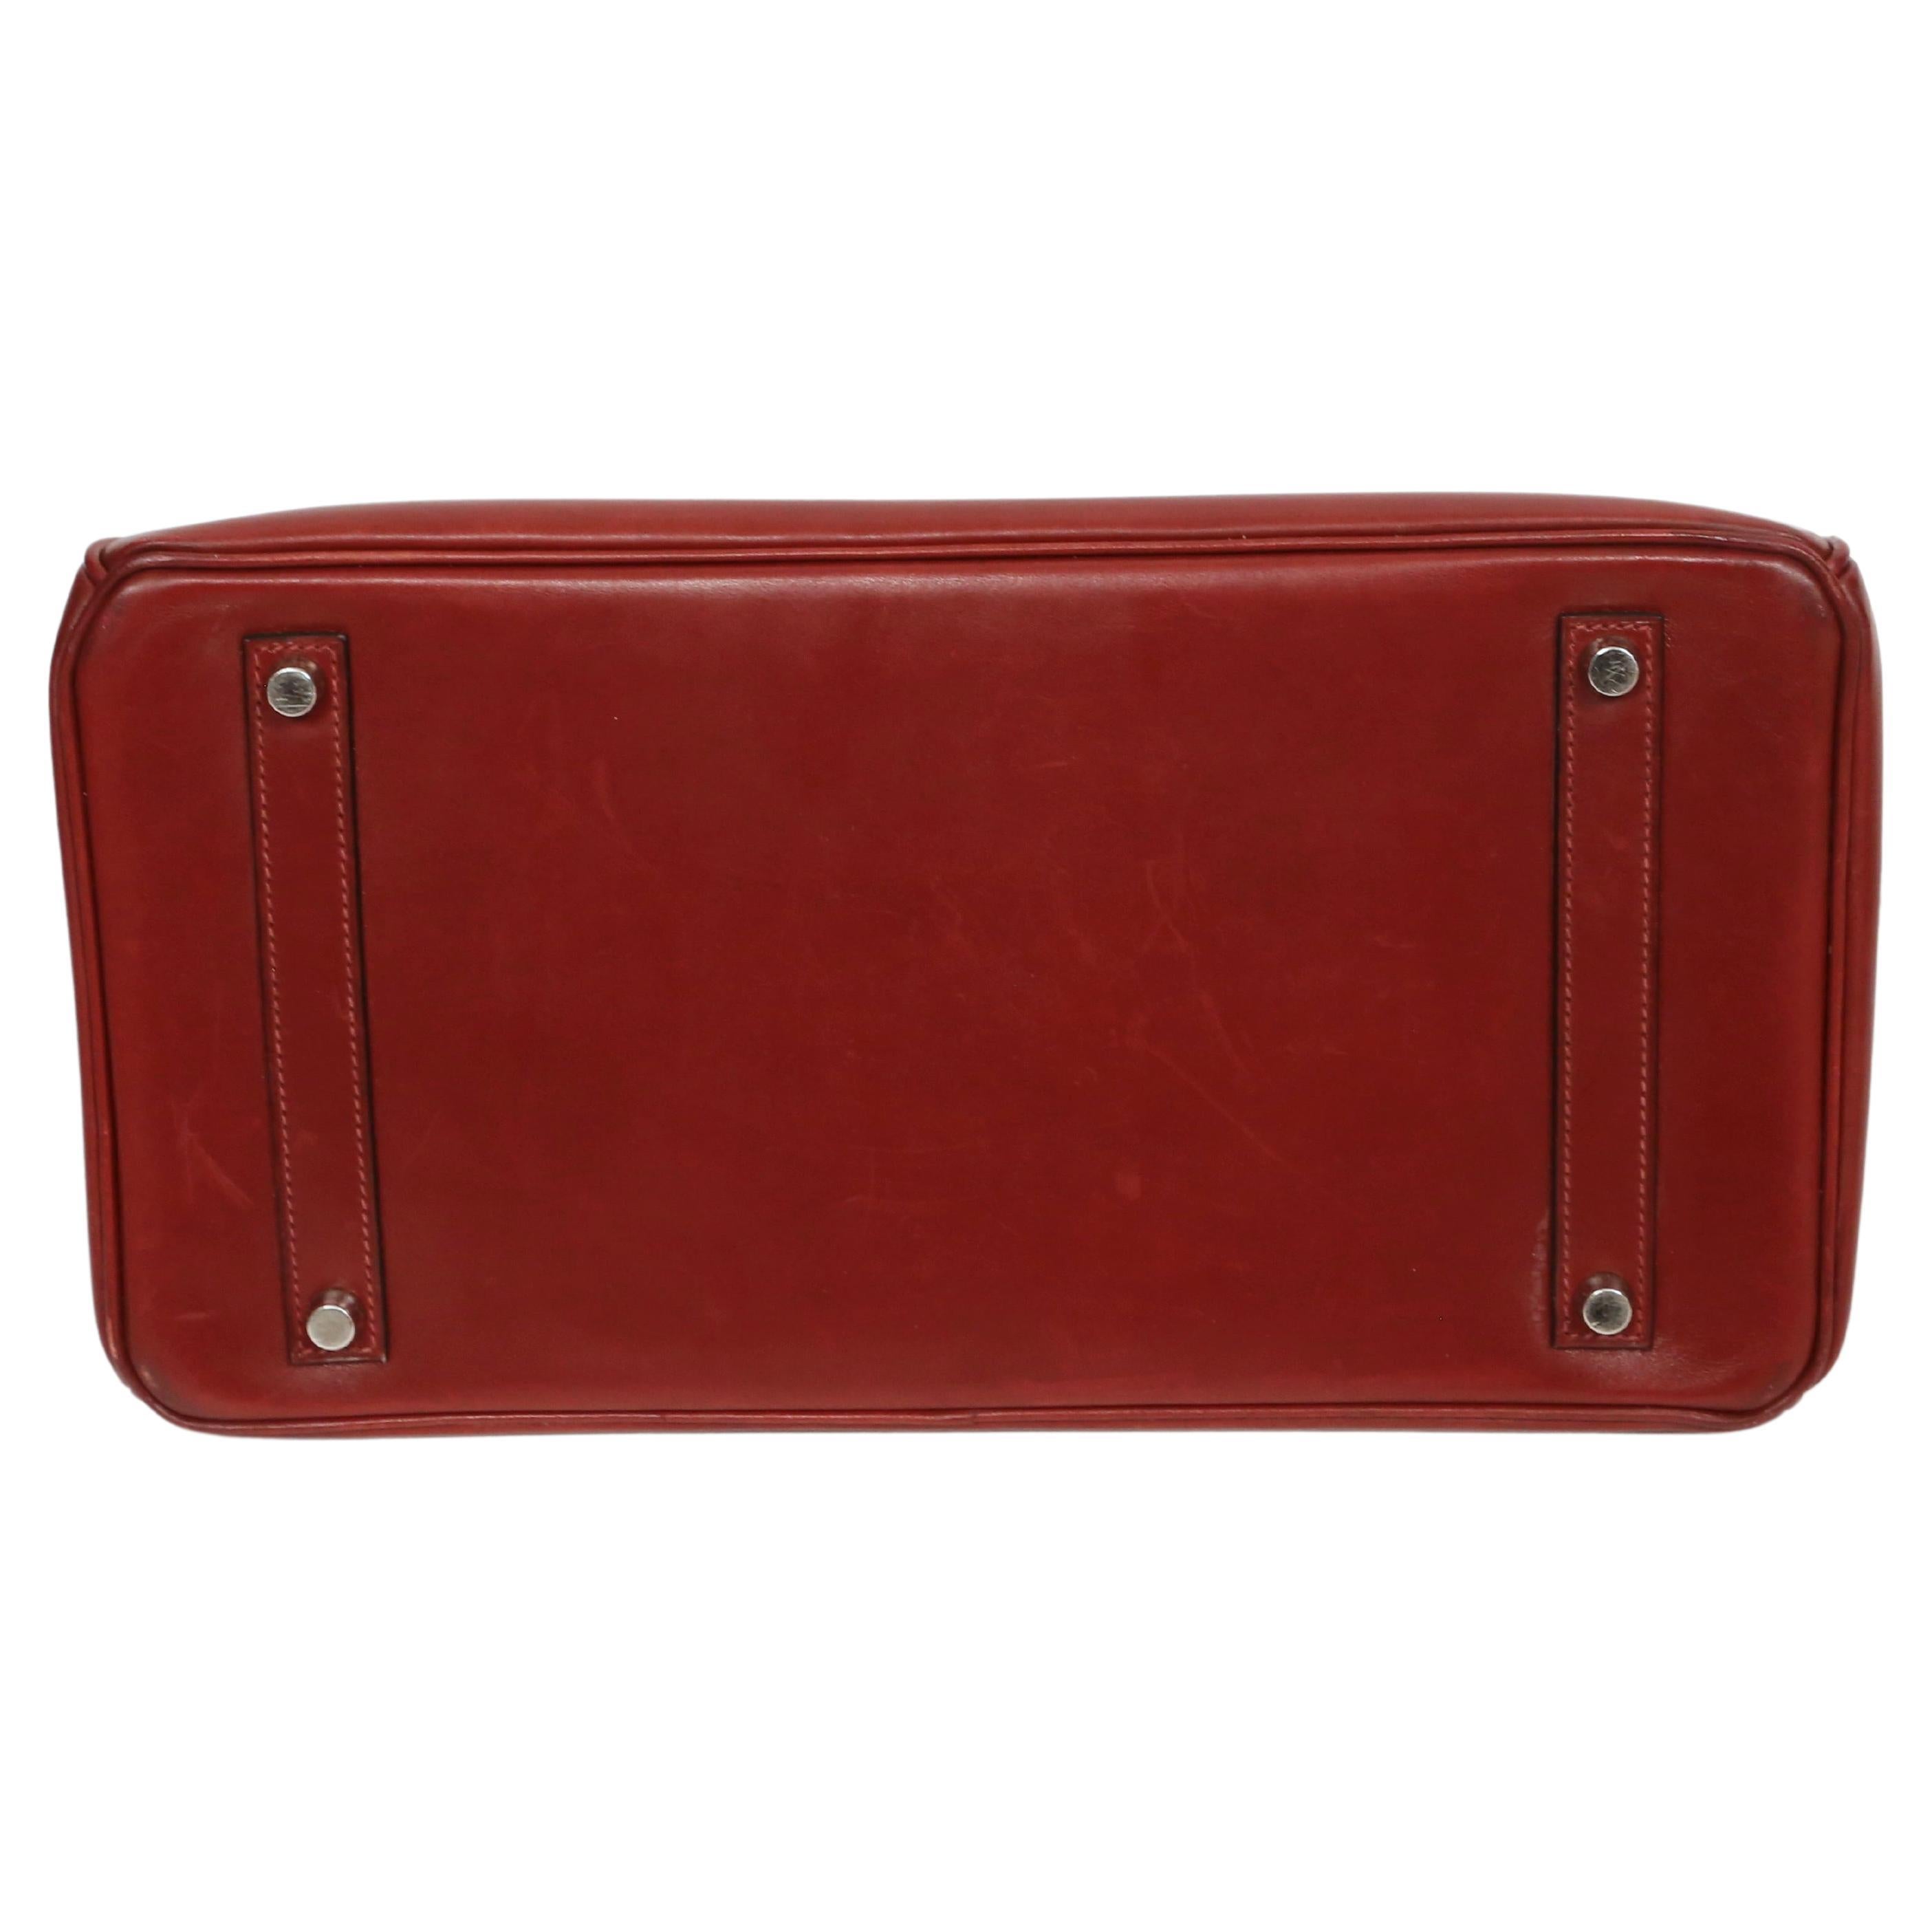 2005 HERMES 35 cm rouge box leather BIRKIN bag 6